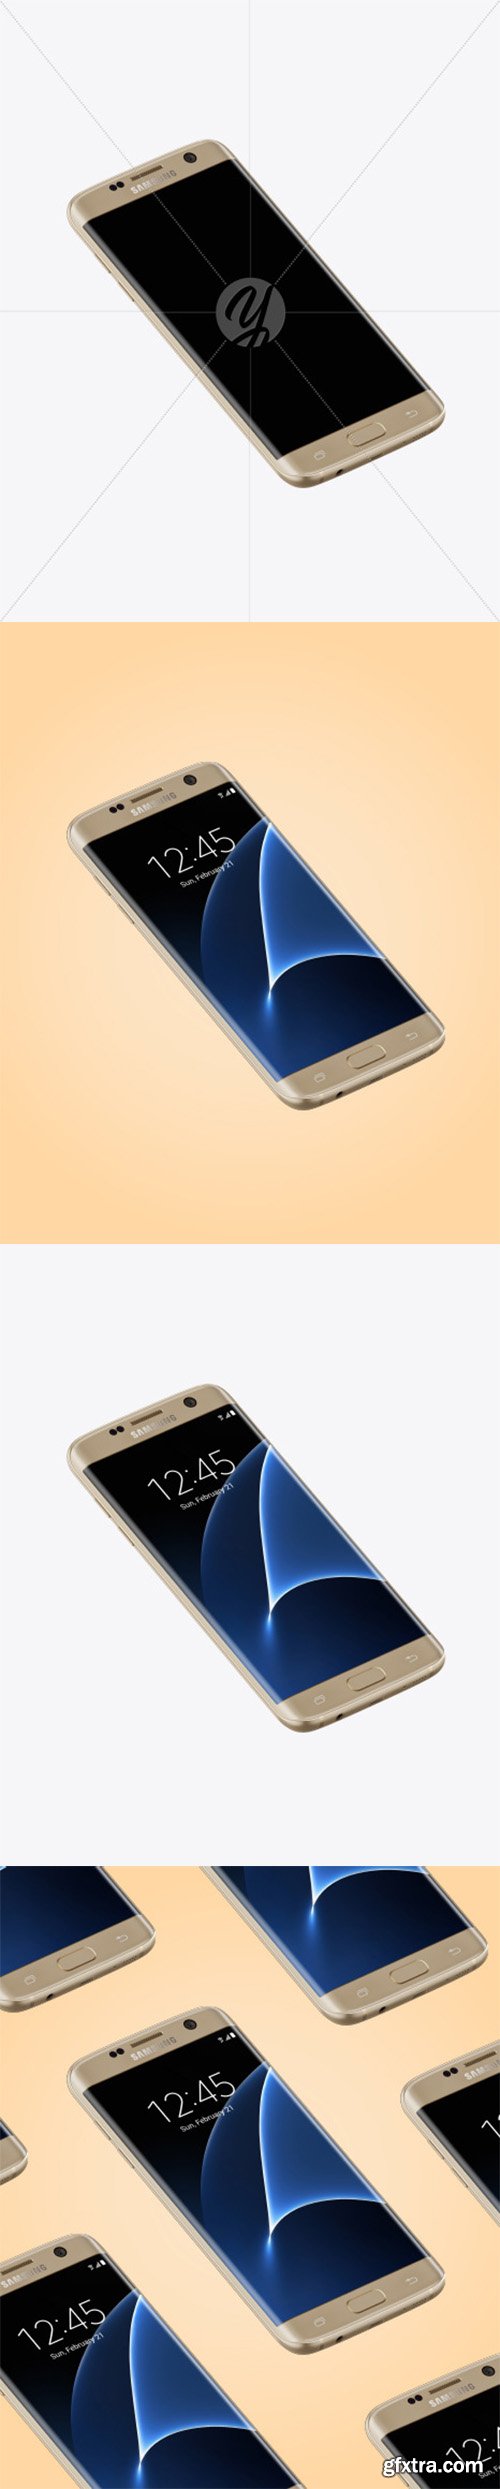 Gold Platinum Samsung Galaxy S7 Phone Mockup 52214